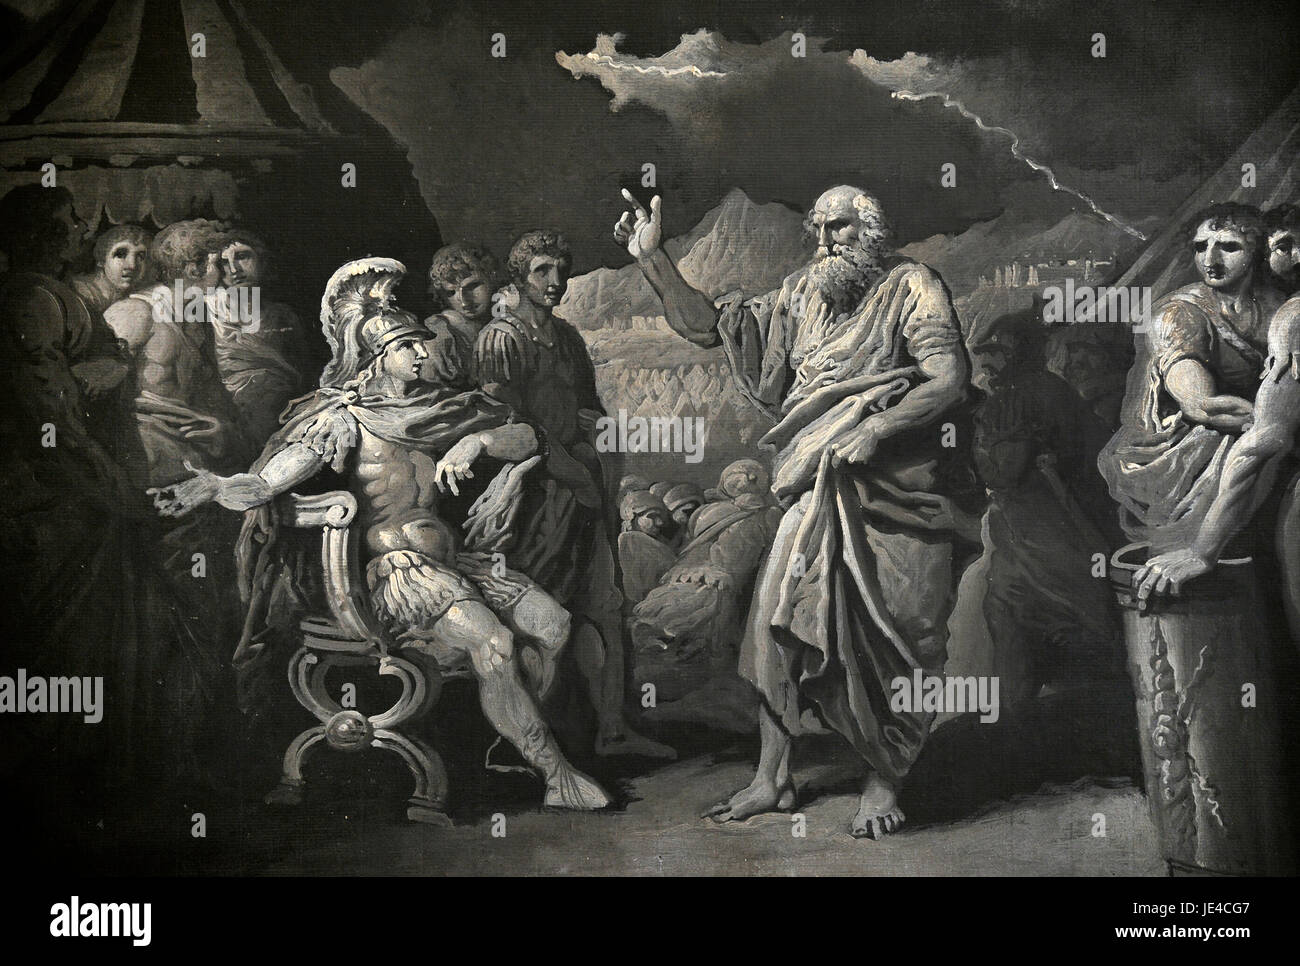 Franciszek Smuglewicz (1745-1807). Polish-Lithuanian painter. Calchas explaining the Reason of Apollo's anger to Achilles. Vilnius Picture Gallery Stock Photo